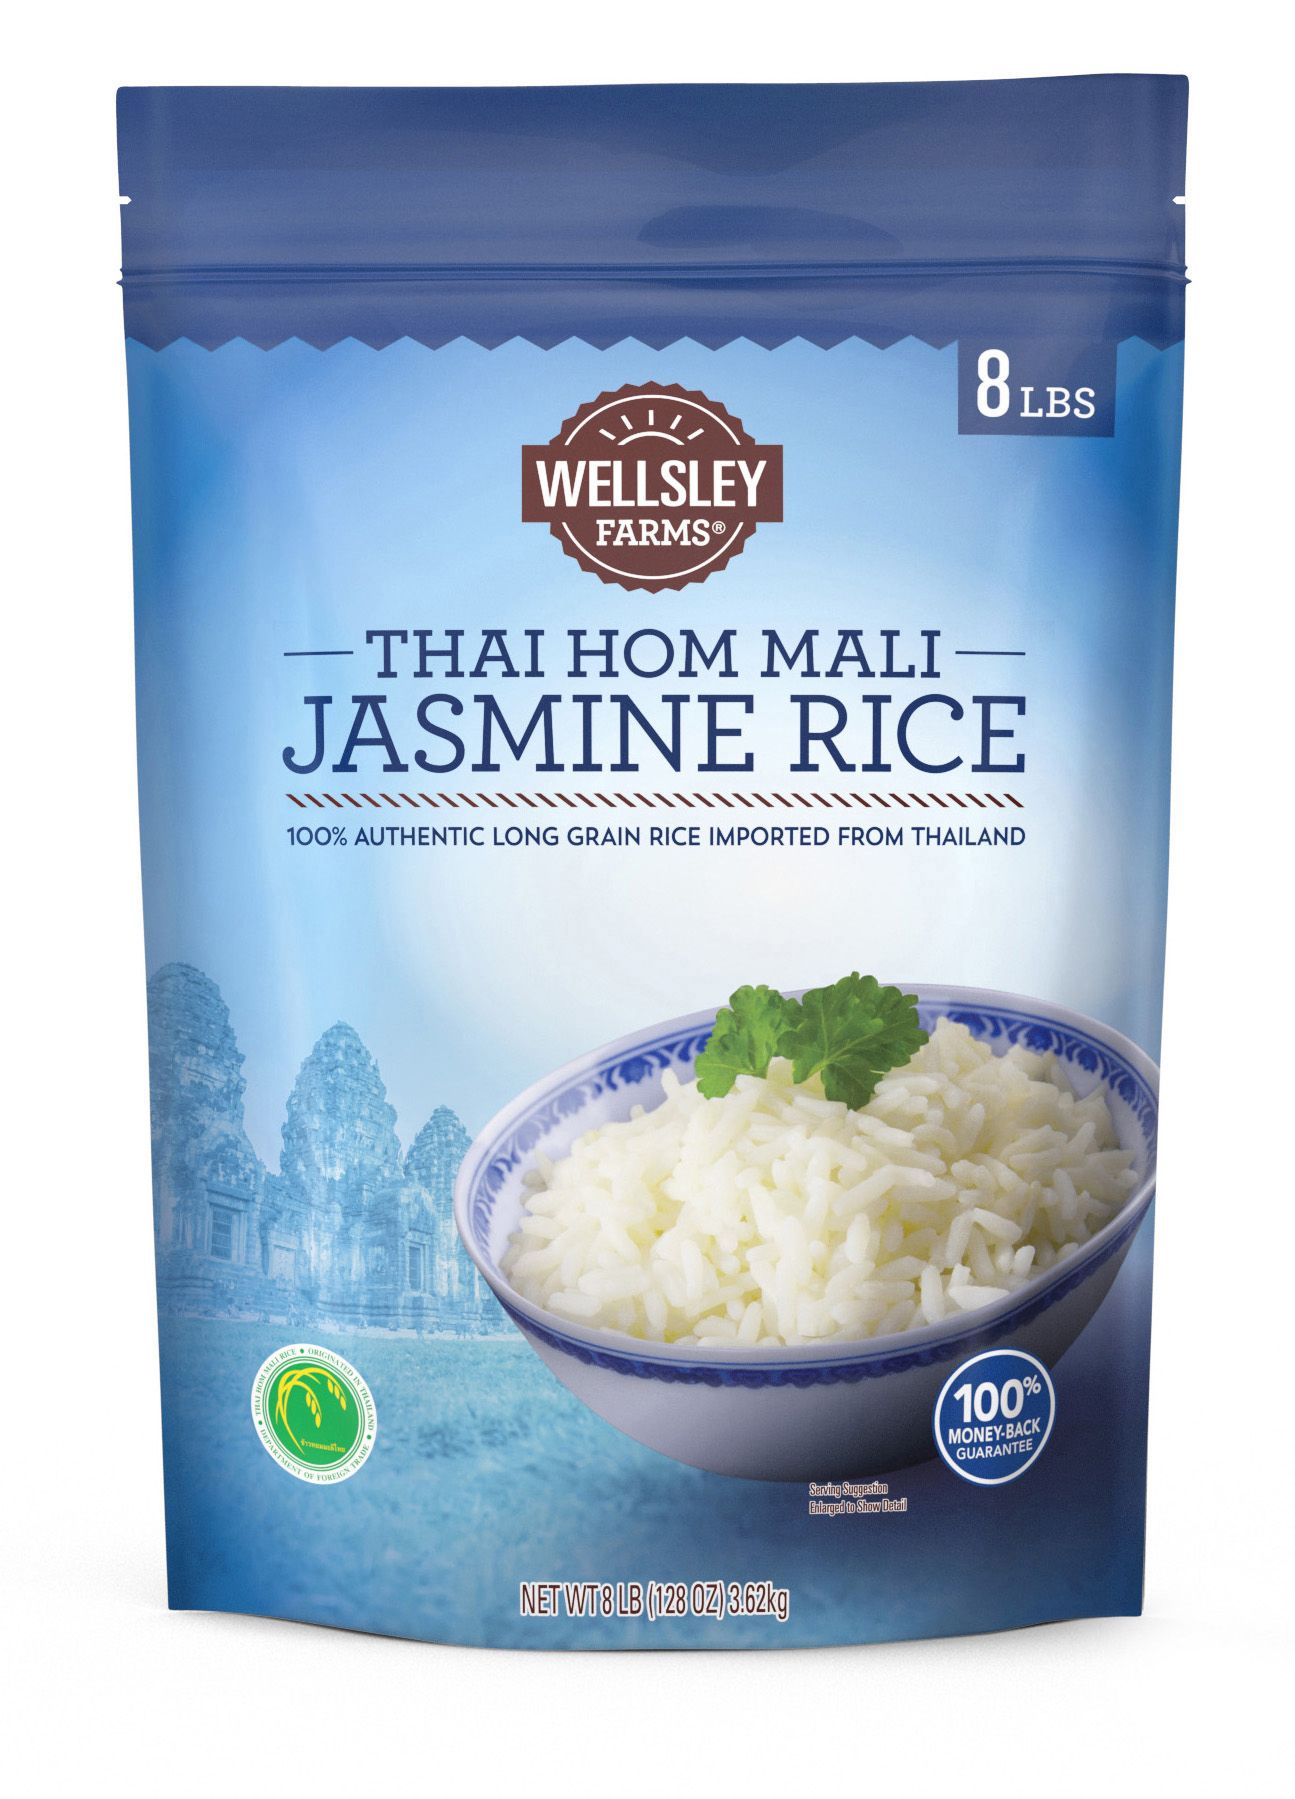 Wellsley Farms Thai Hom Mali Jasmine Rice, 8 lbs.